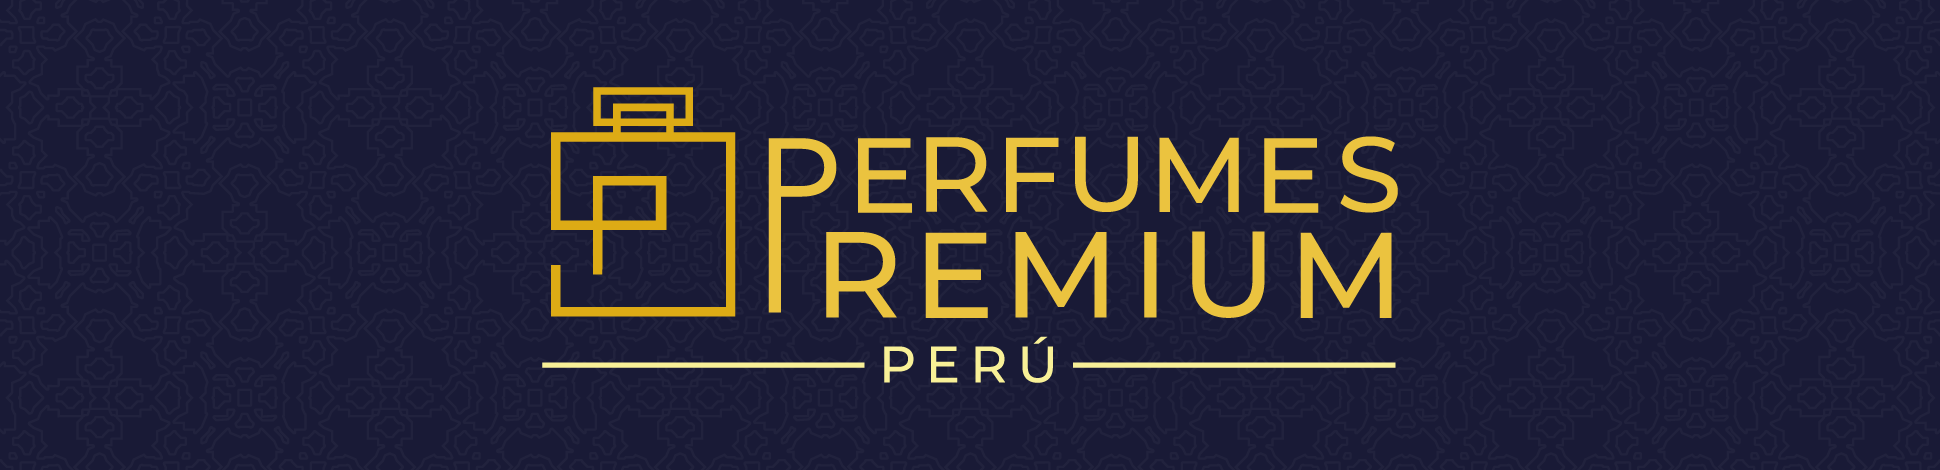 Logo-Perefumes-premium-1940x470.png